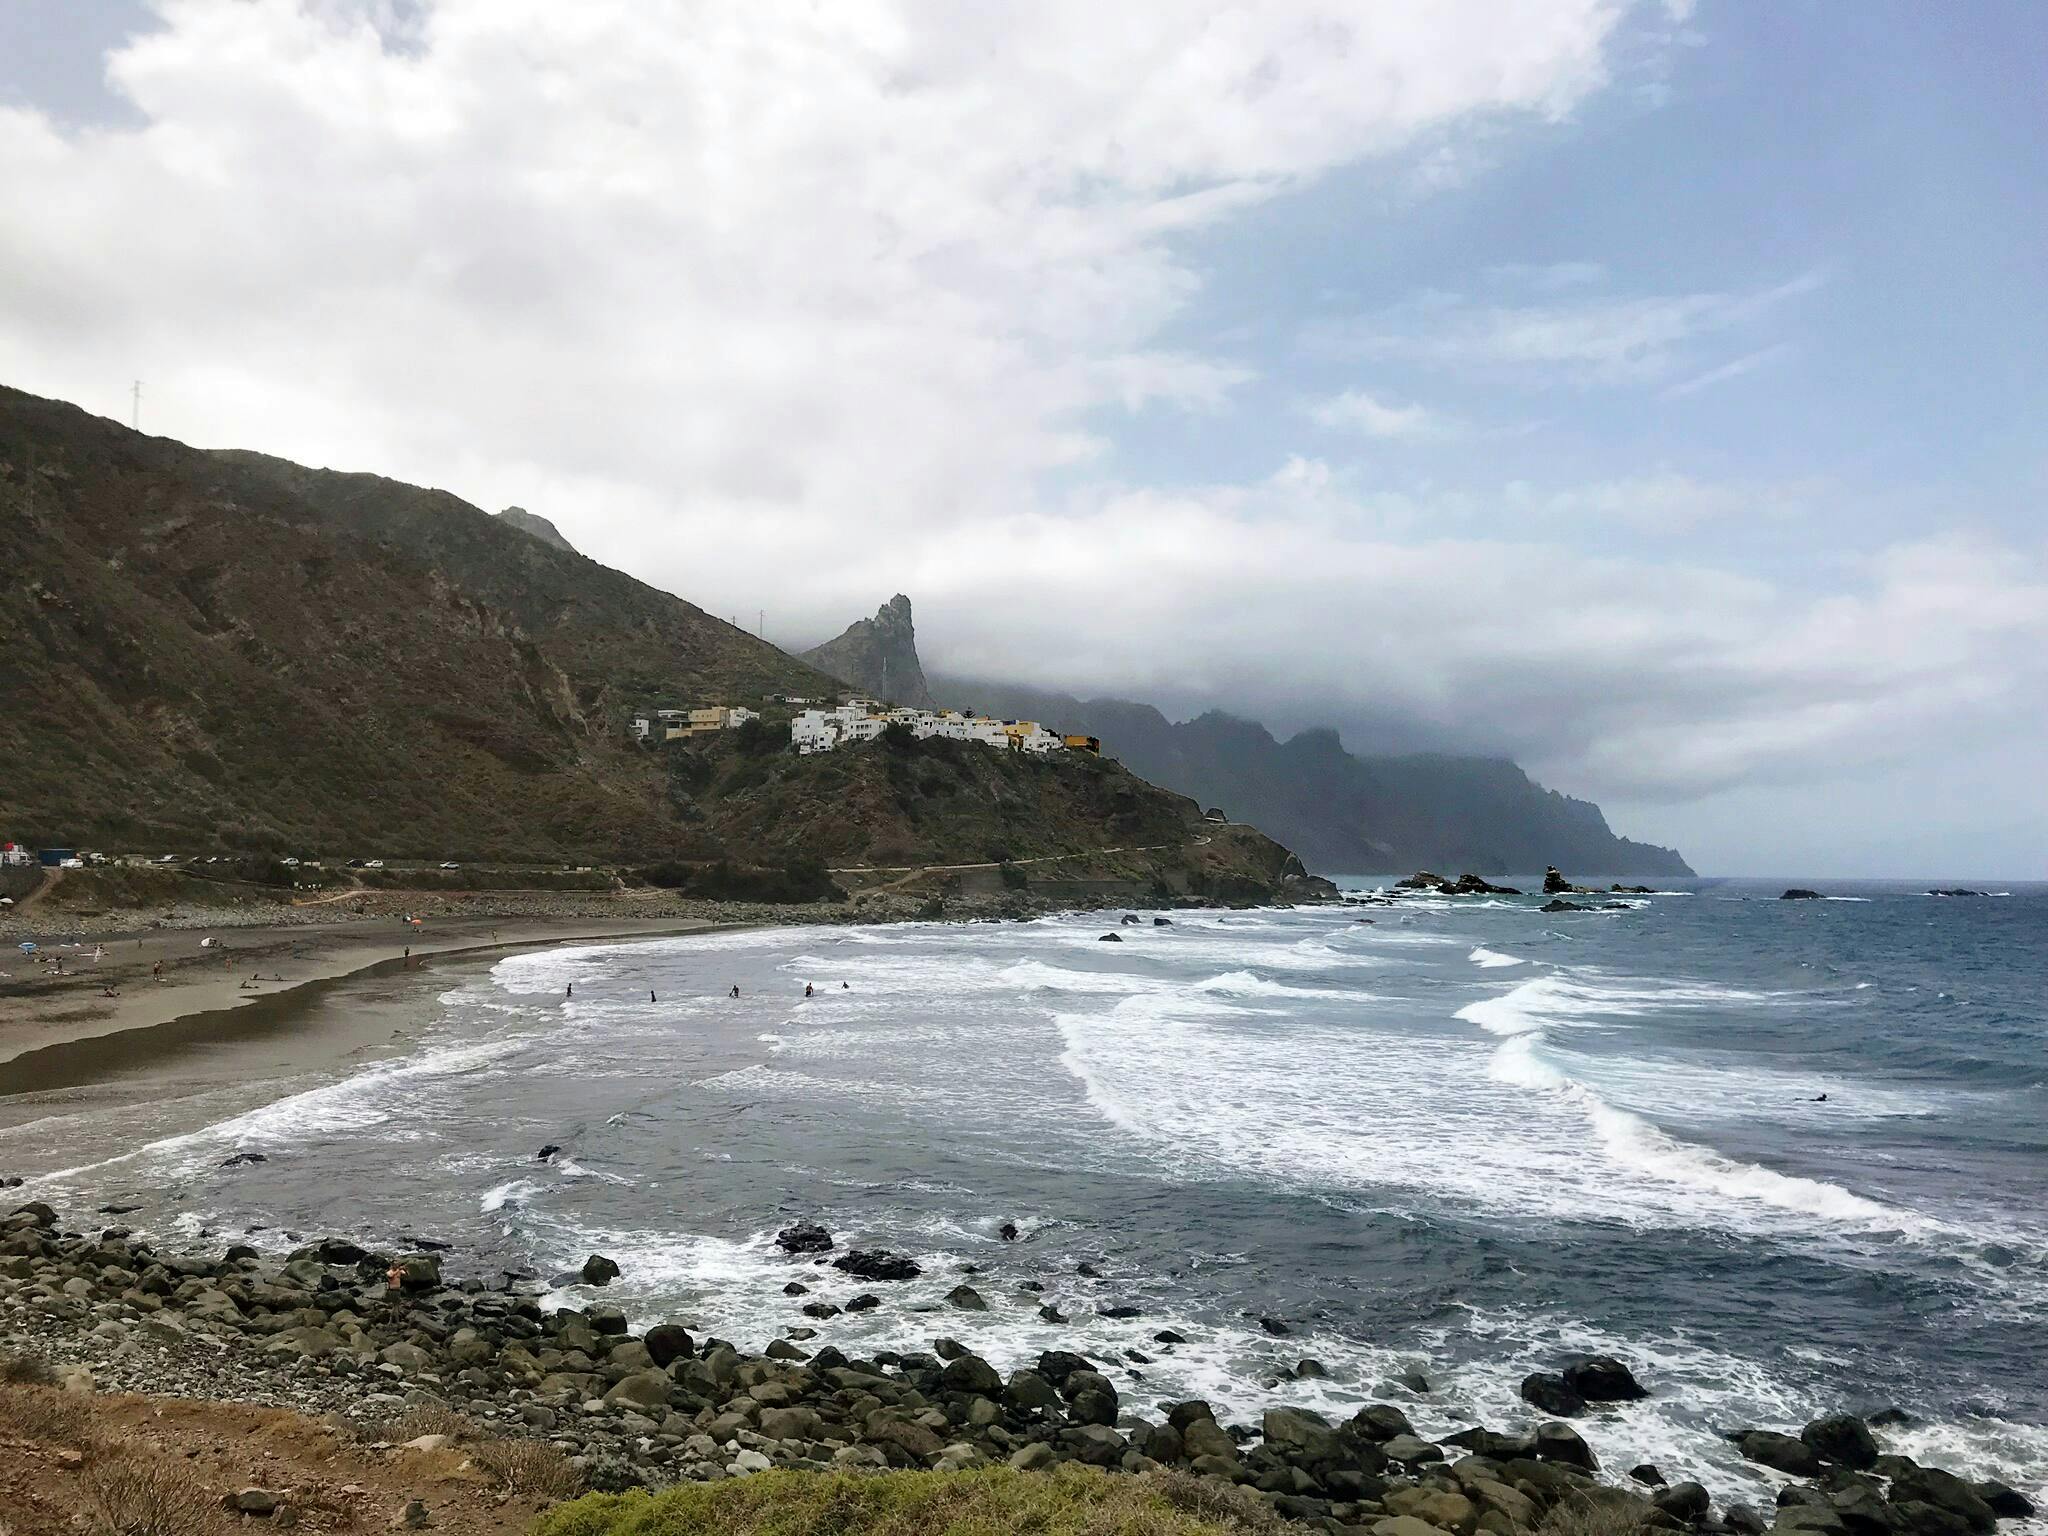 Tenerife på rundtur i landsbyer med Anaga Country Park og frokost